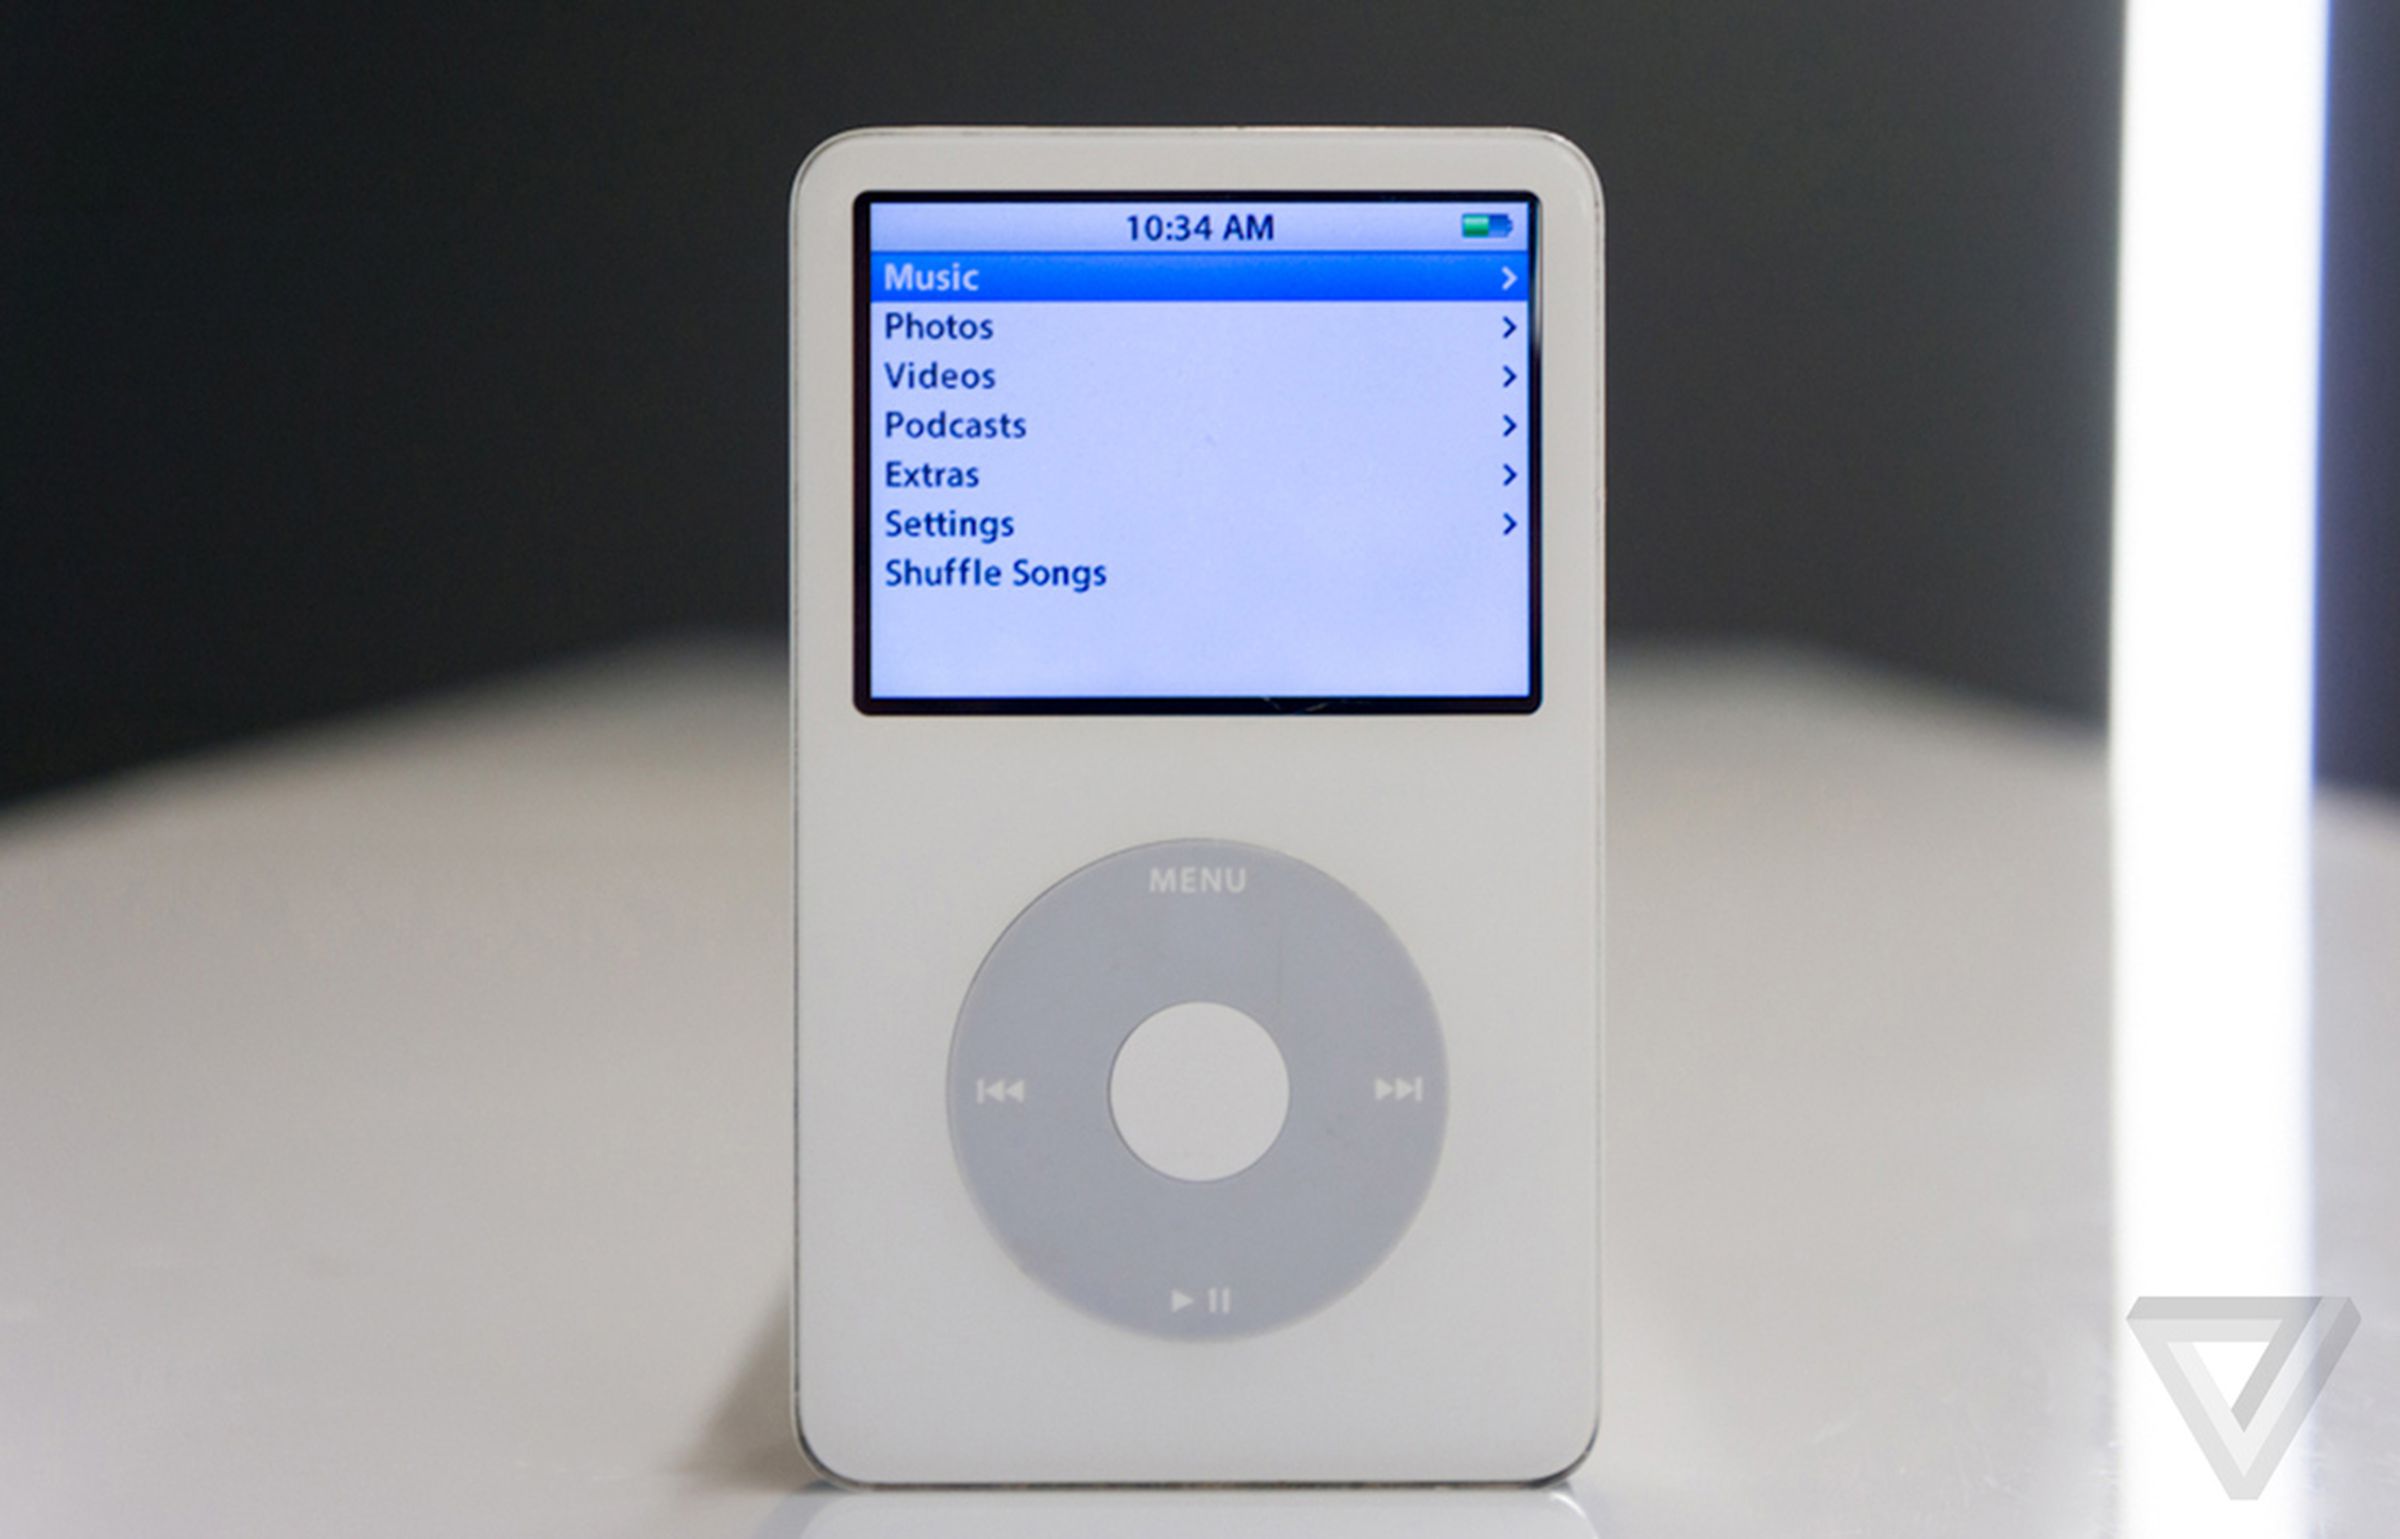 iPod classic: a visual history